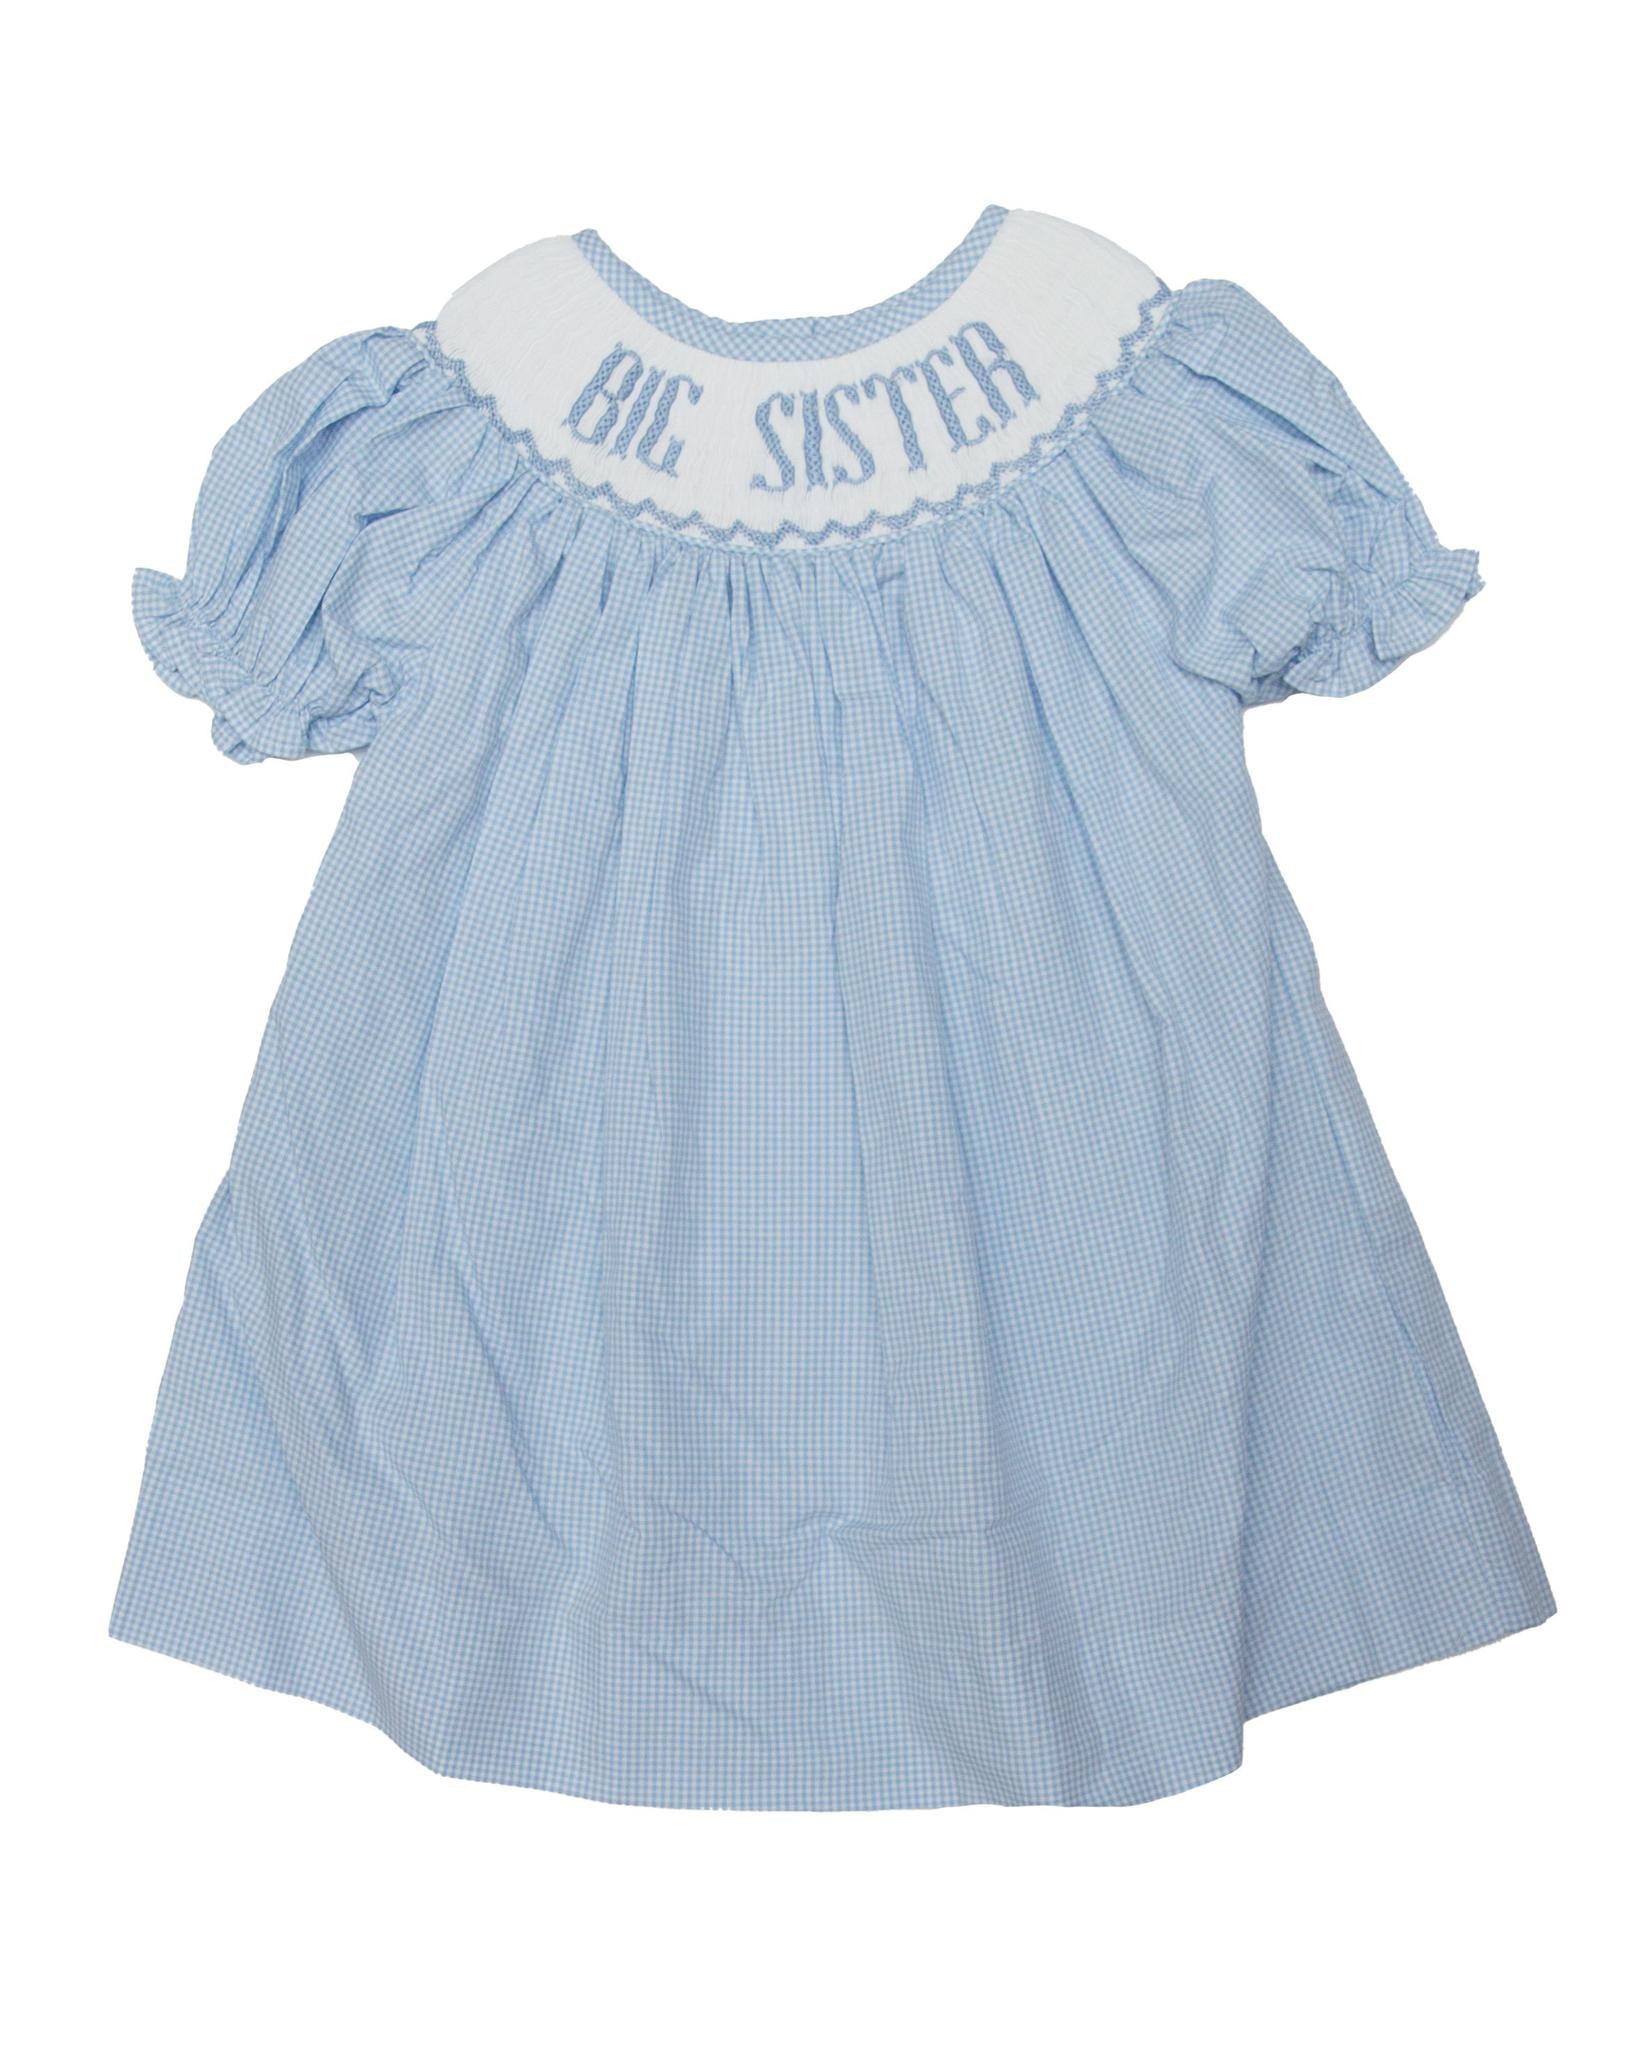 Big Sister - Blue Gingham Emmie Dress